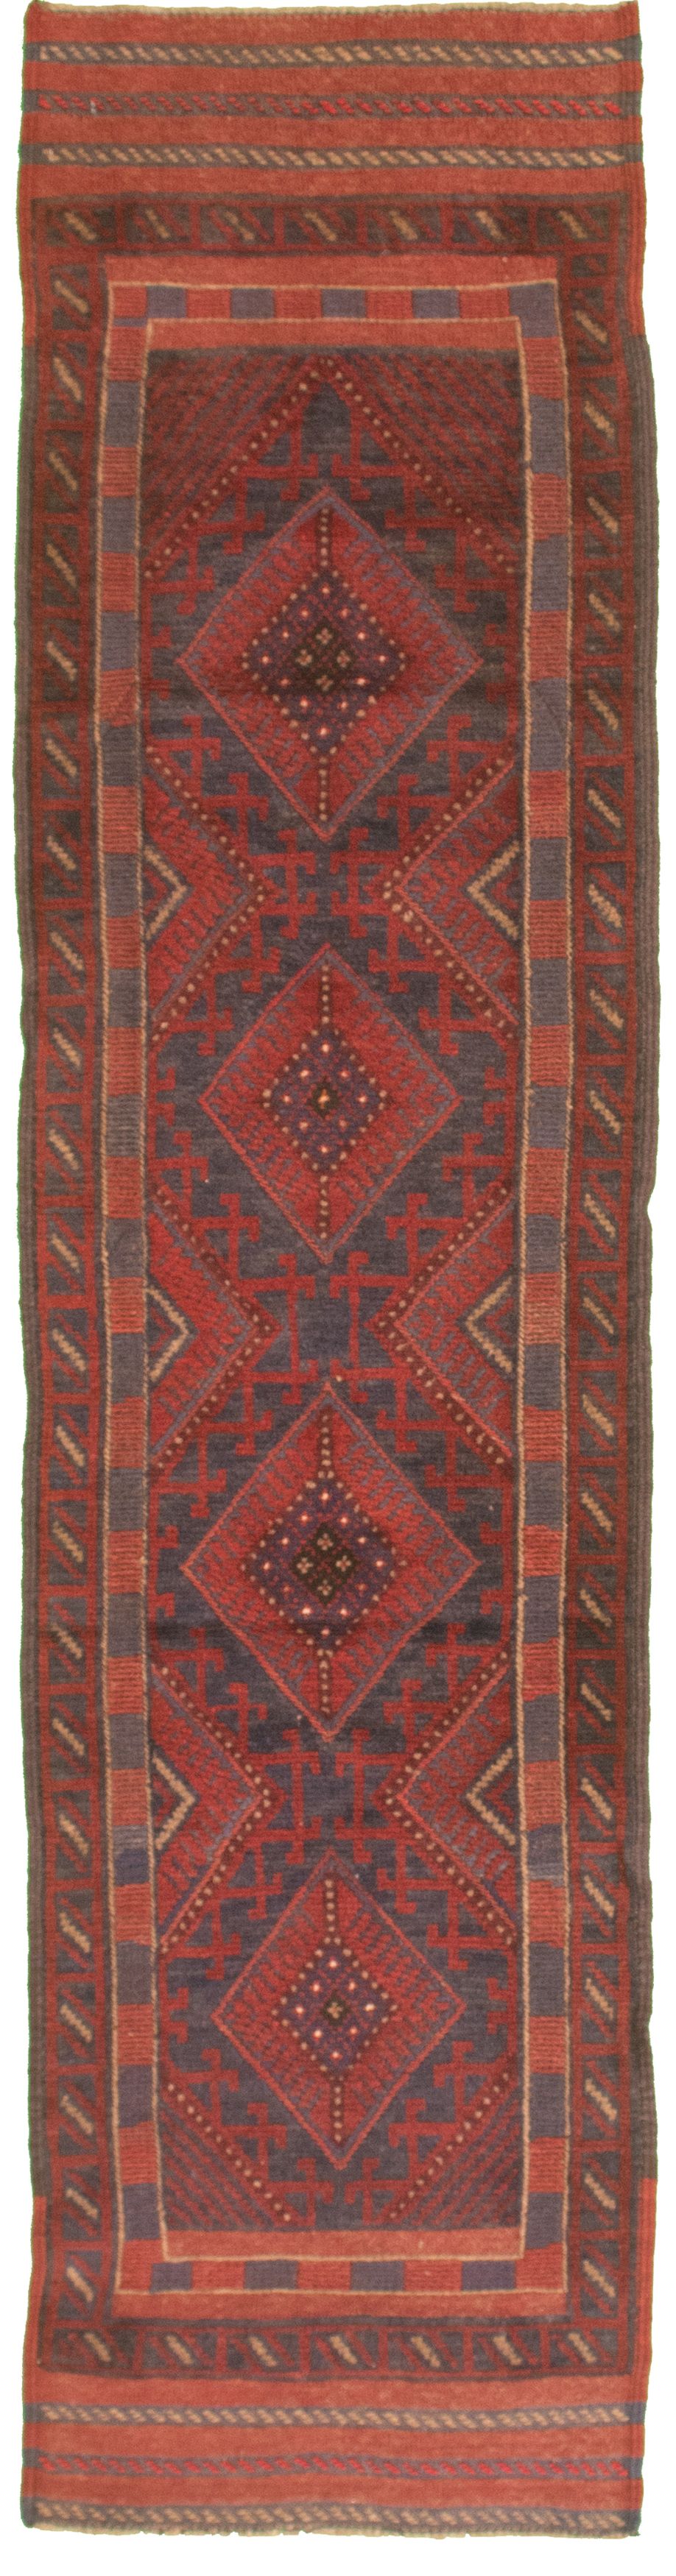 Hand-knotted Tajik Caucasian Red Wool Rug 1'11" x 8'7"  Size: 1'11" x 8'7"  